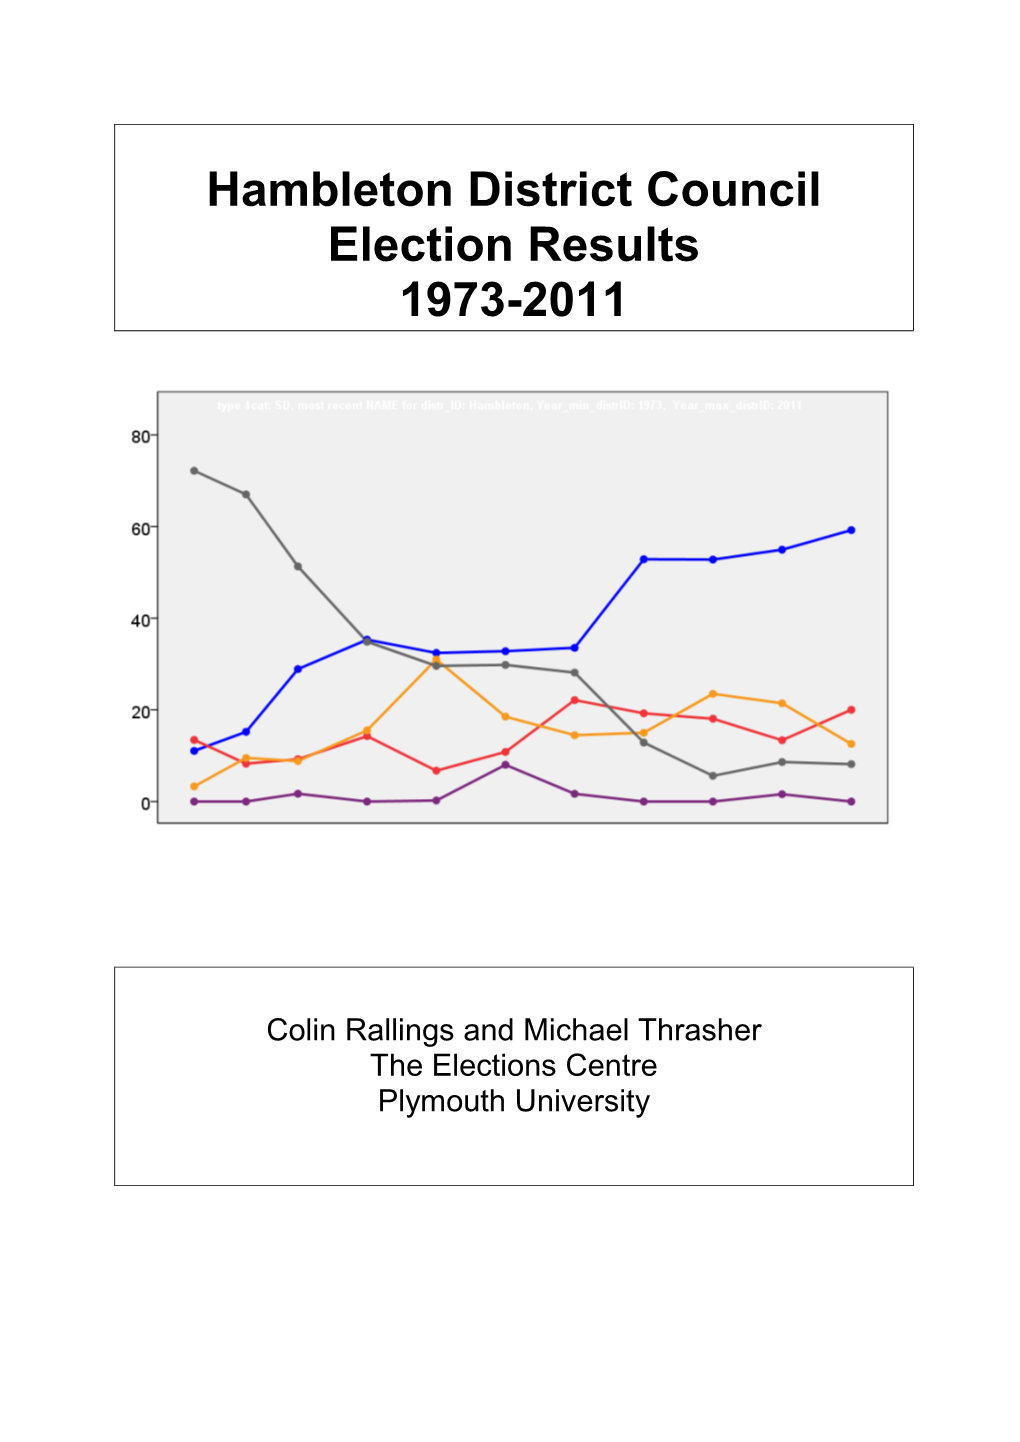 Hambleton District Council Election Results 1973-2011